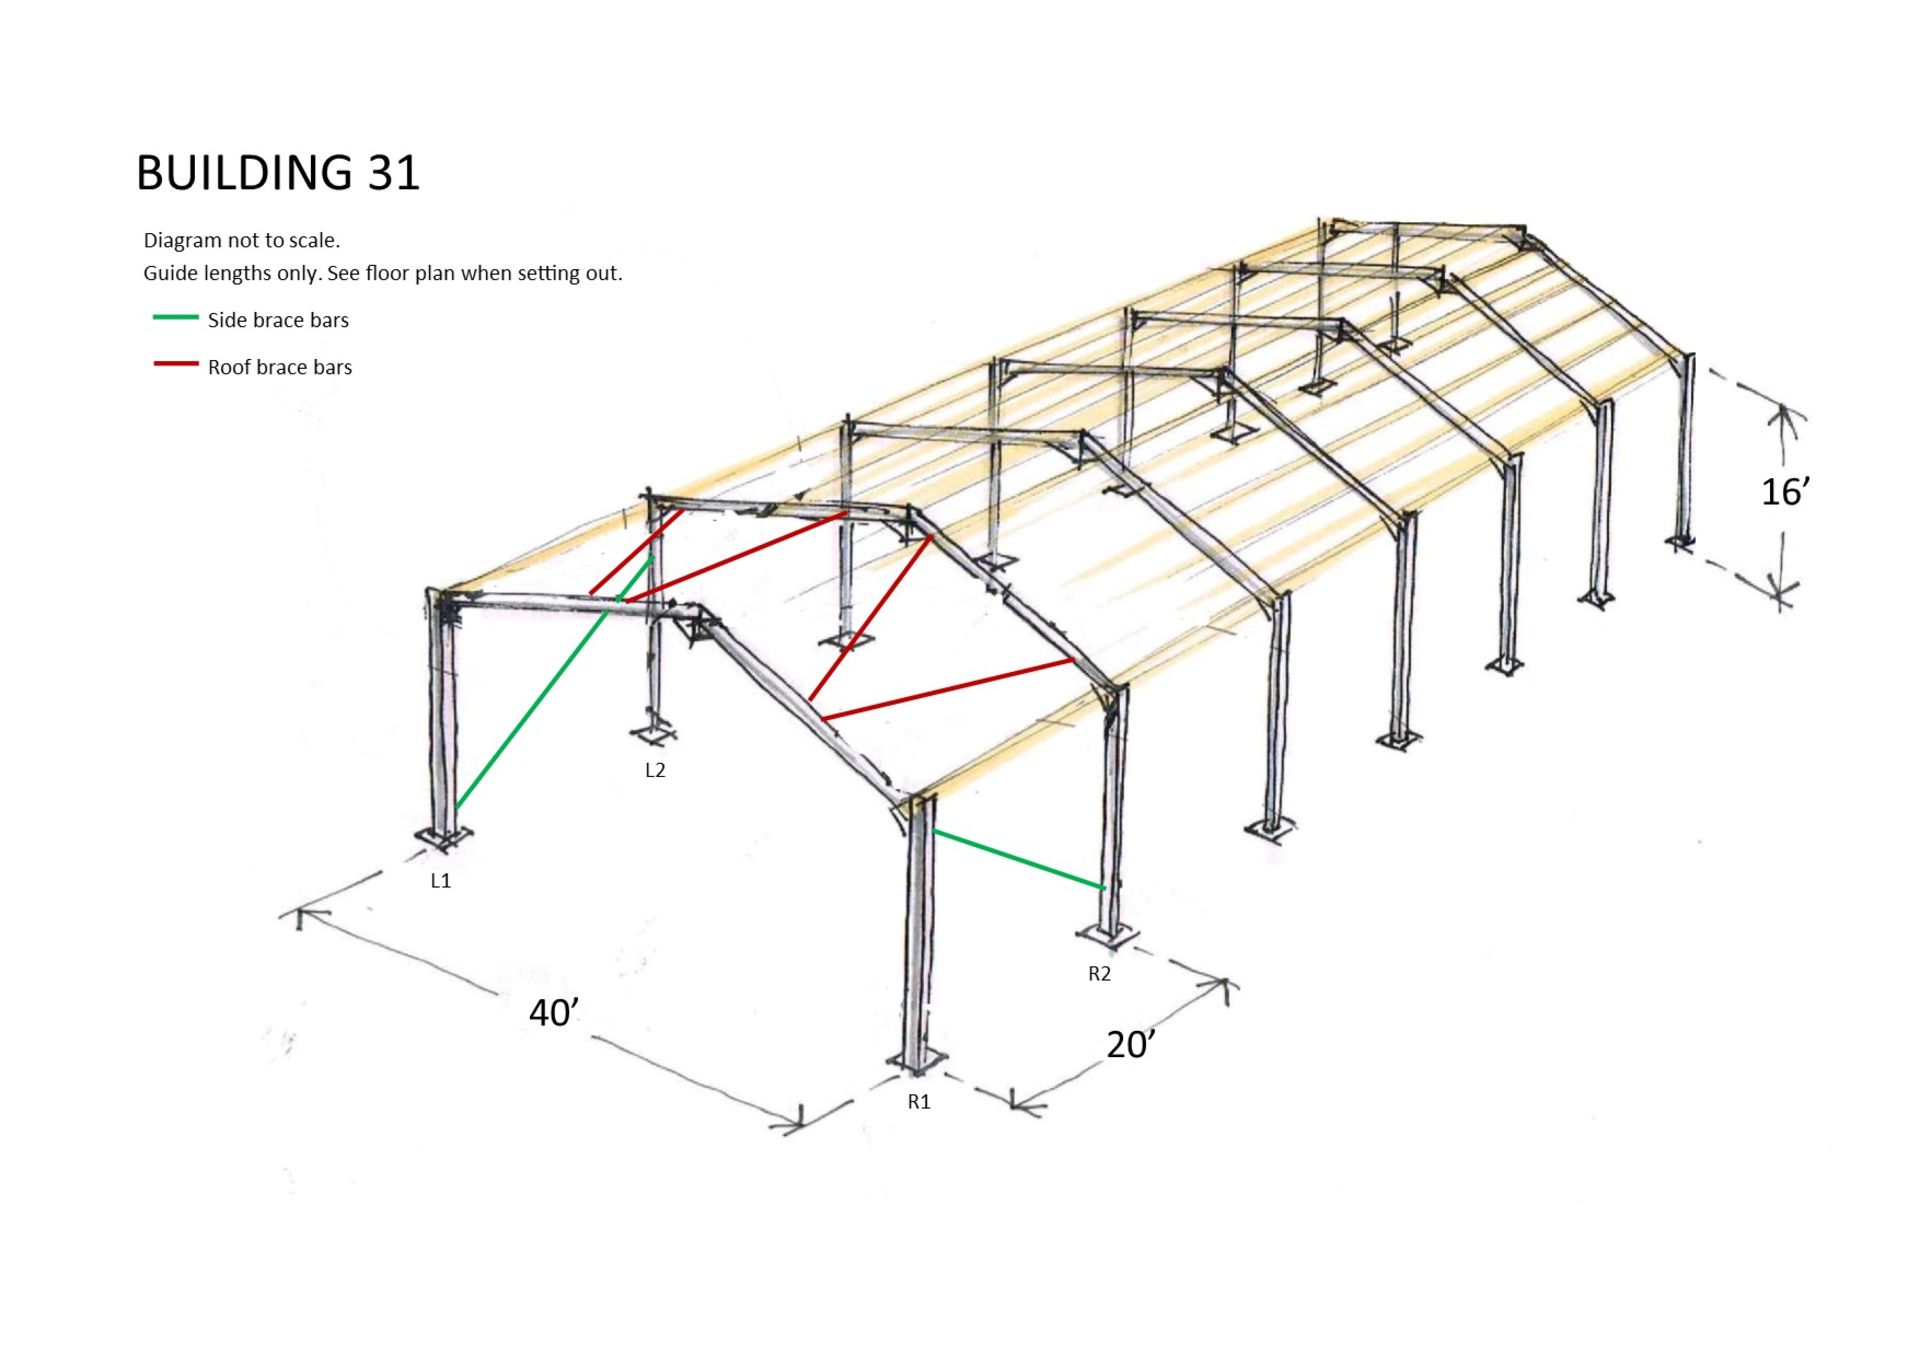 Steel framed building 120ft long x 40 ft wide x 16 ft @ eaves 12 .5 deg roof pitch - Image 7 of 12